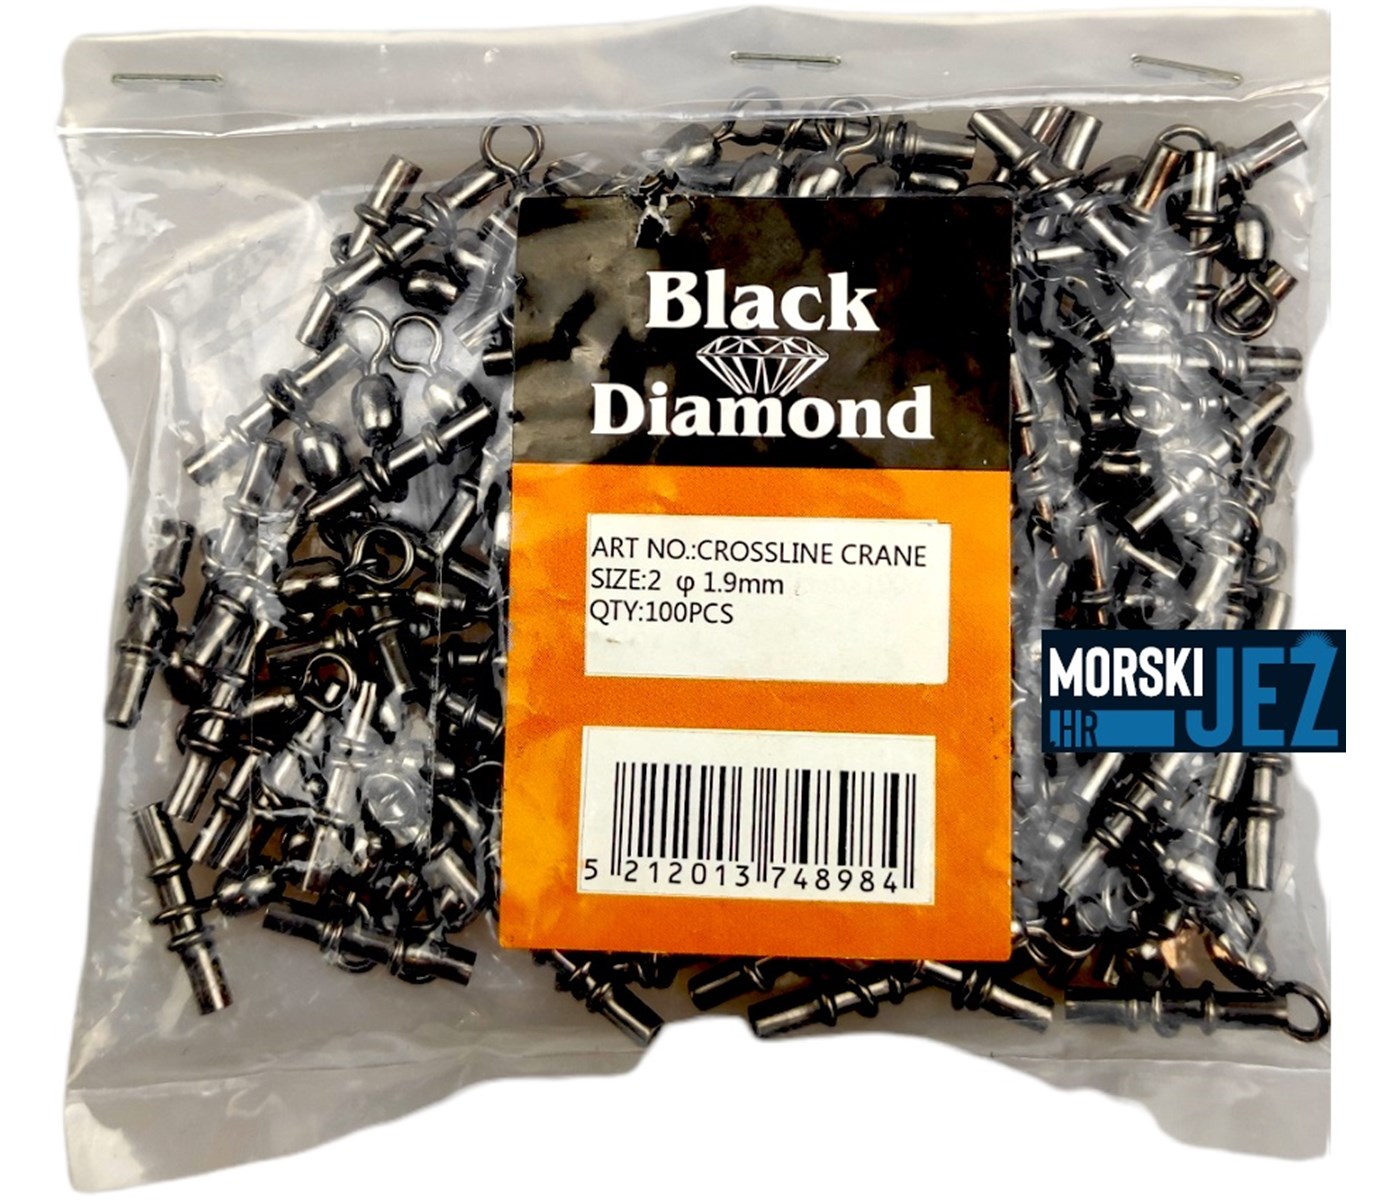 BLACK DIAMOND CROSSLINE CRANE Vel.2 (dia.1,9mm)